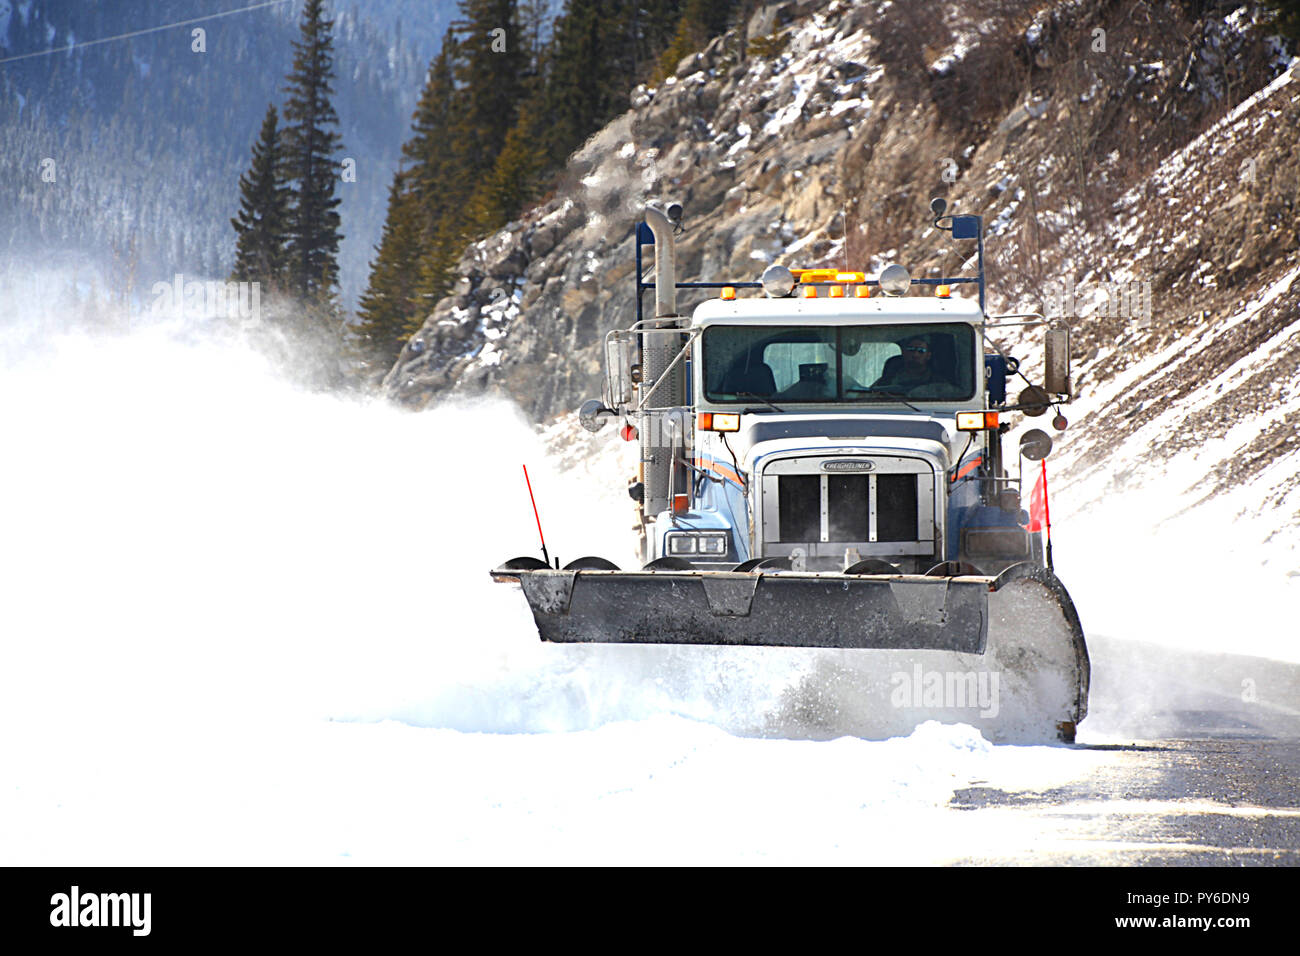 Snow plowing the mountain roads in Kananaskis Provincial Park, Alberta, Canada Stock Photo